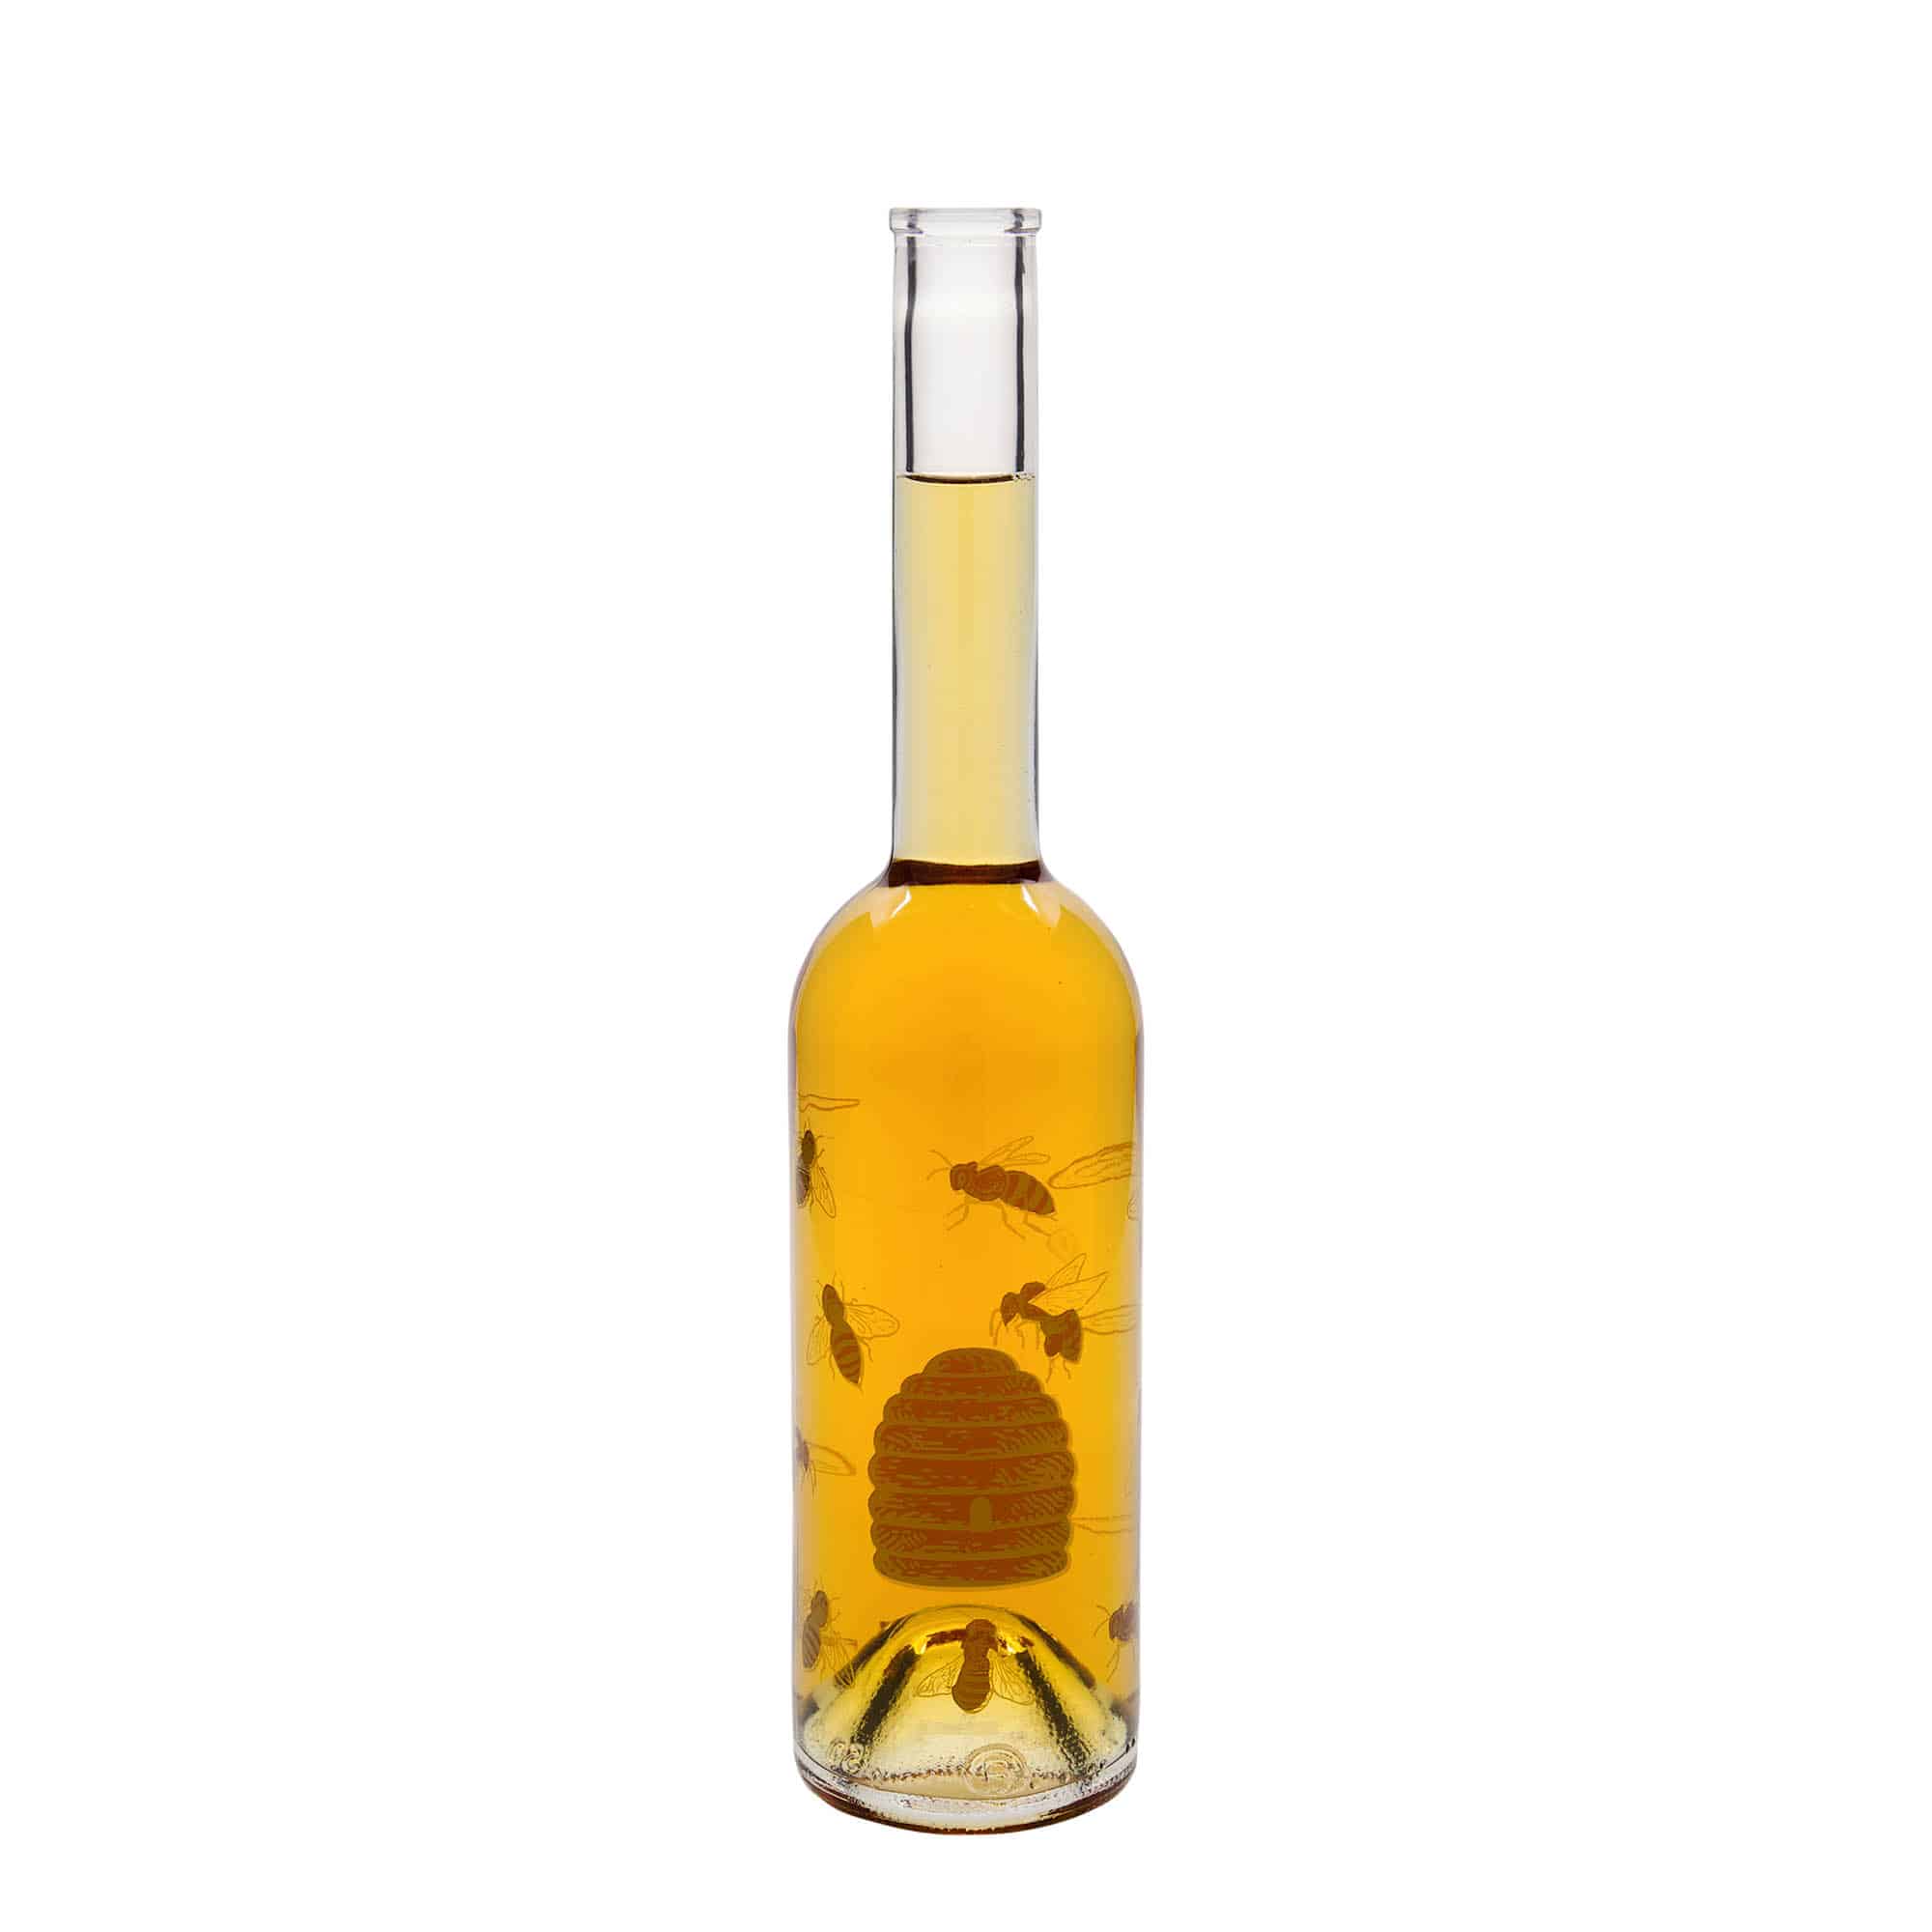 500 ml glass bottle 'Opera', print: bees, closure: cork